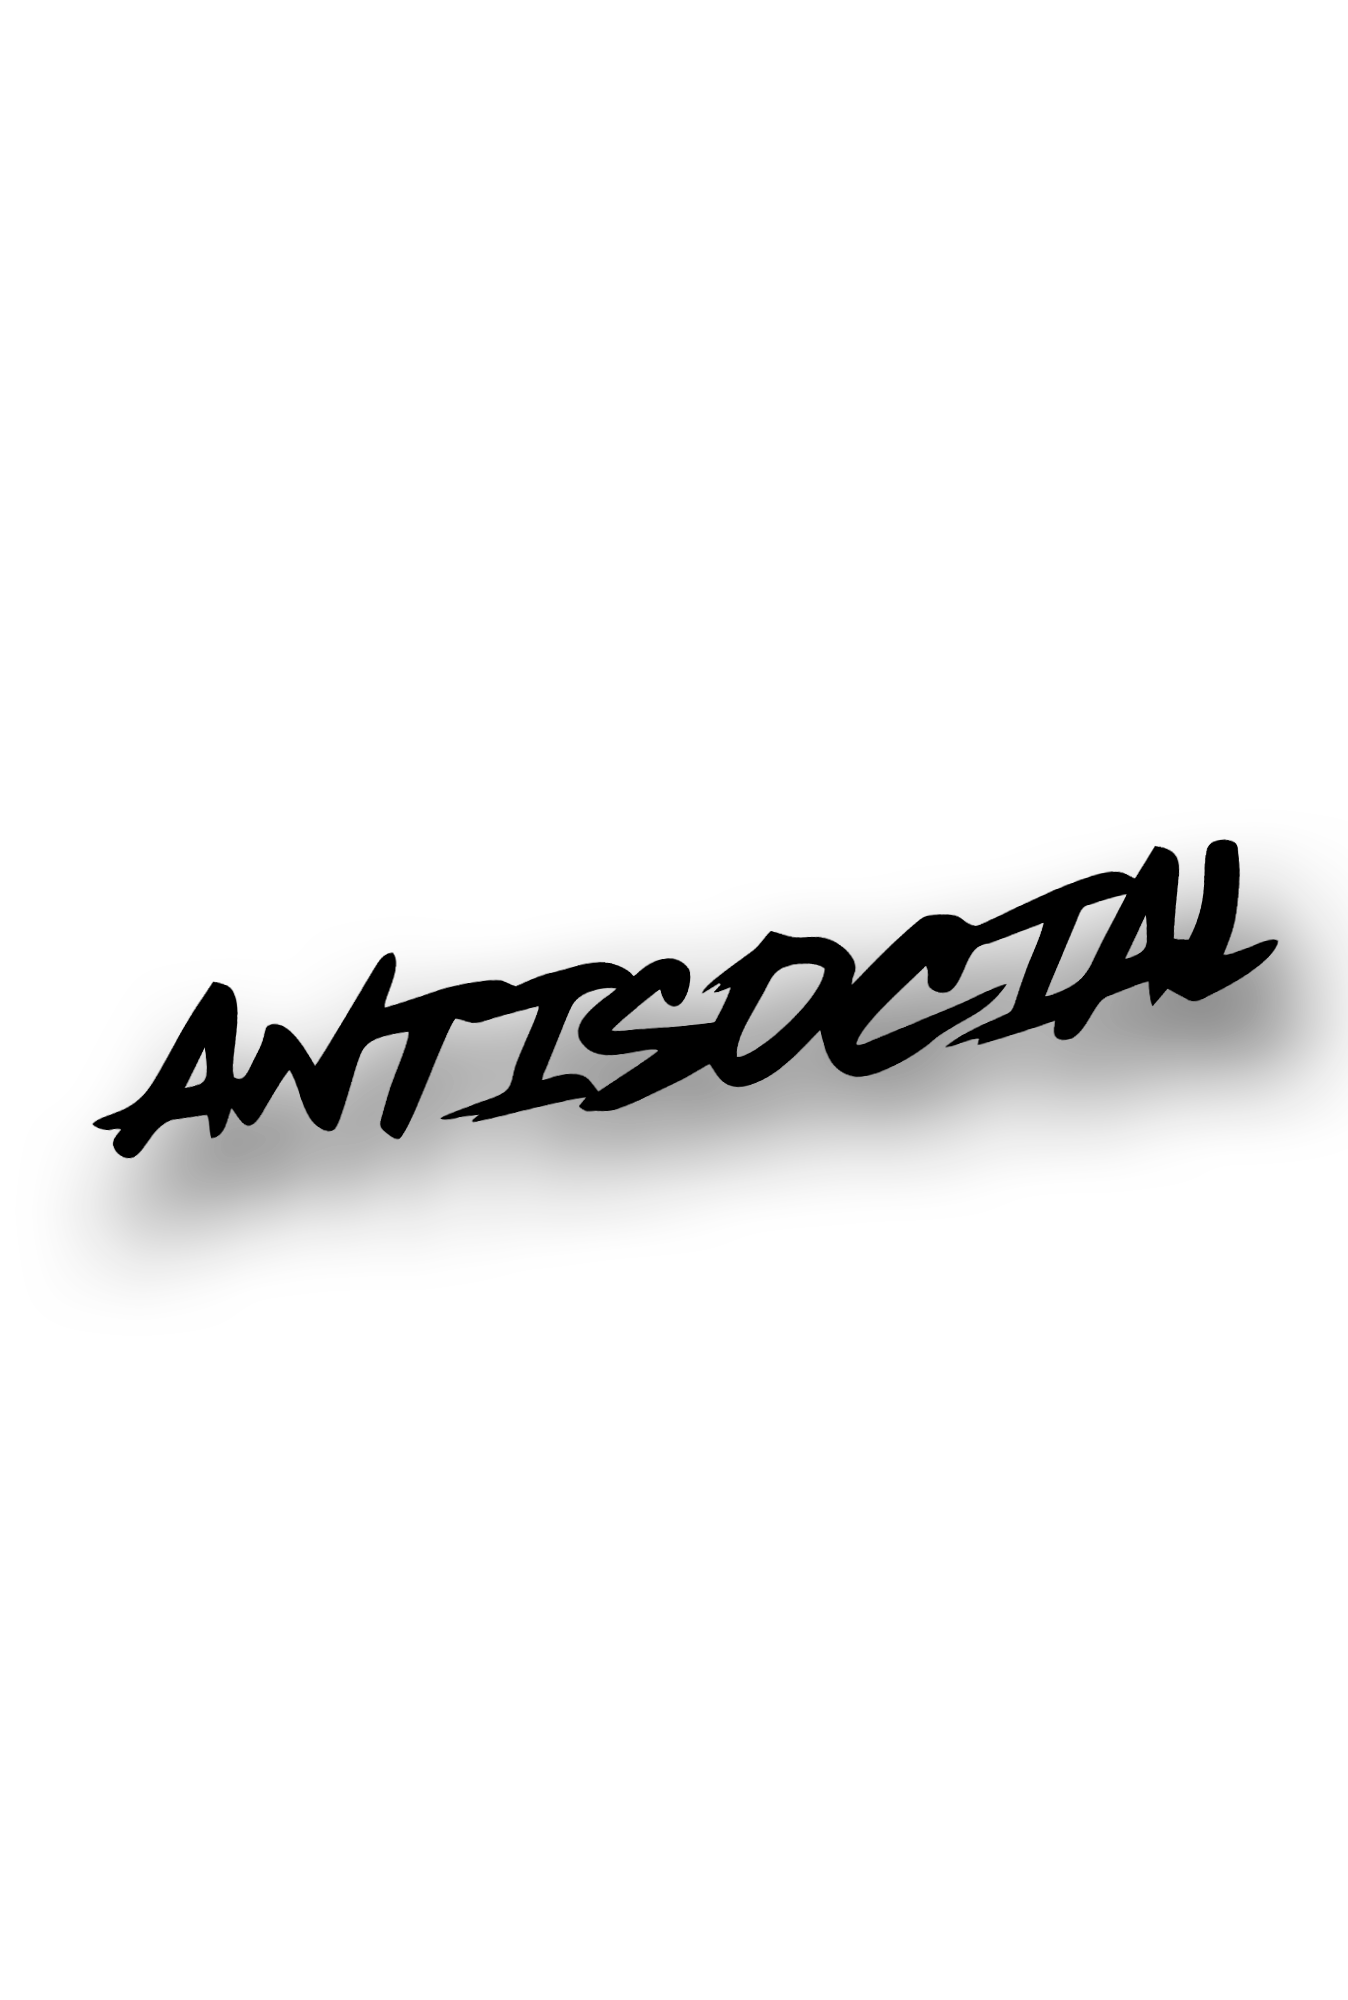 ''Antisocial'' - Plotted Vinyl Sticker